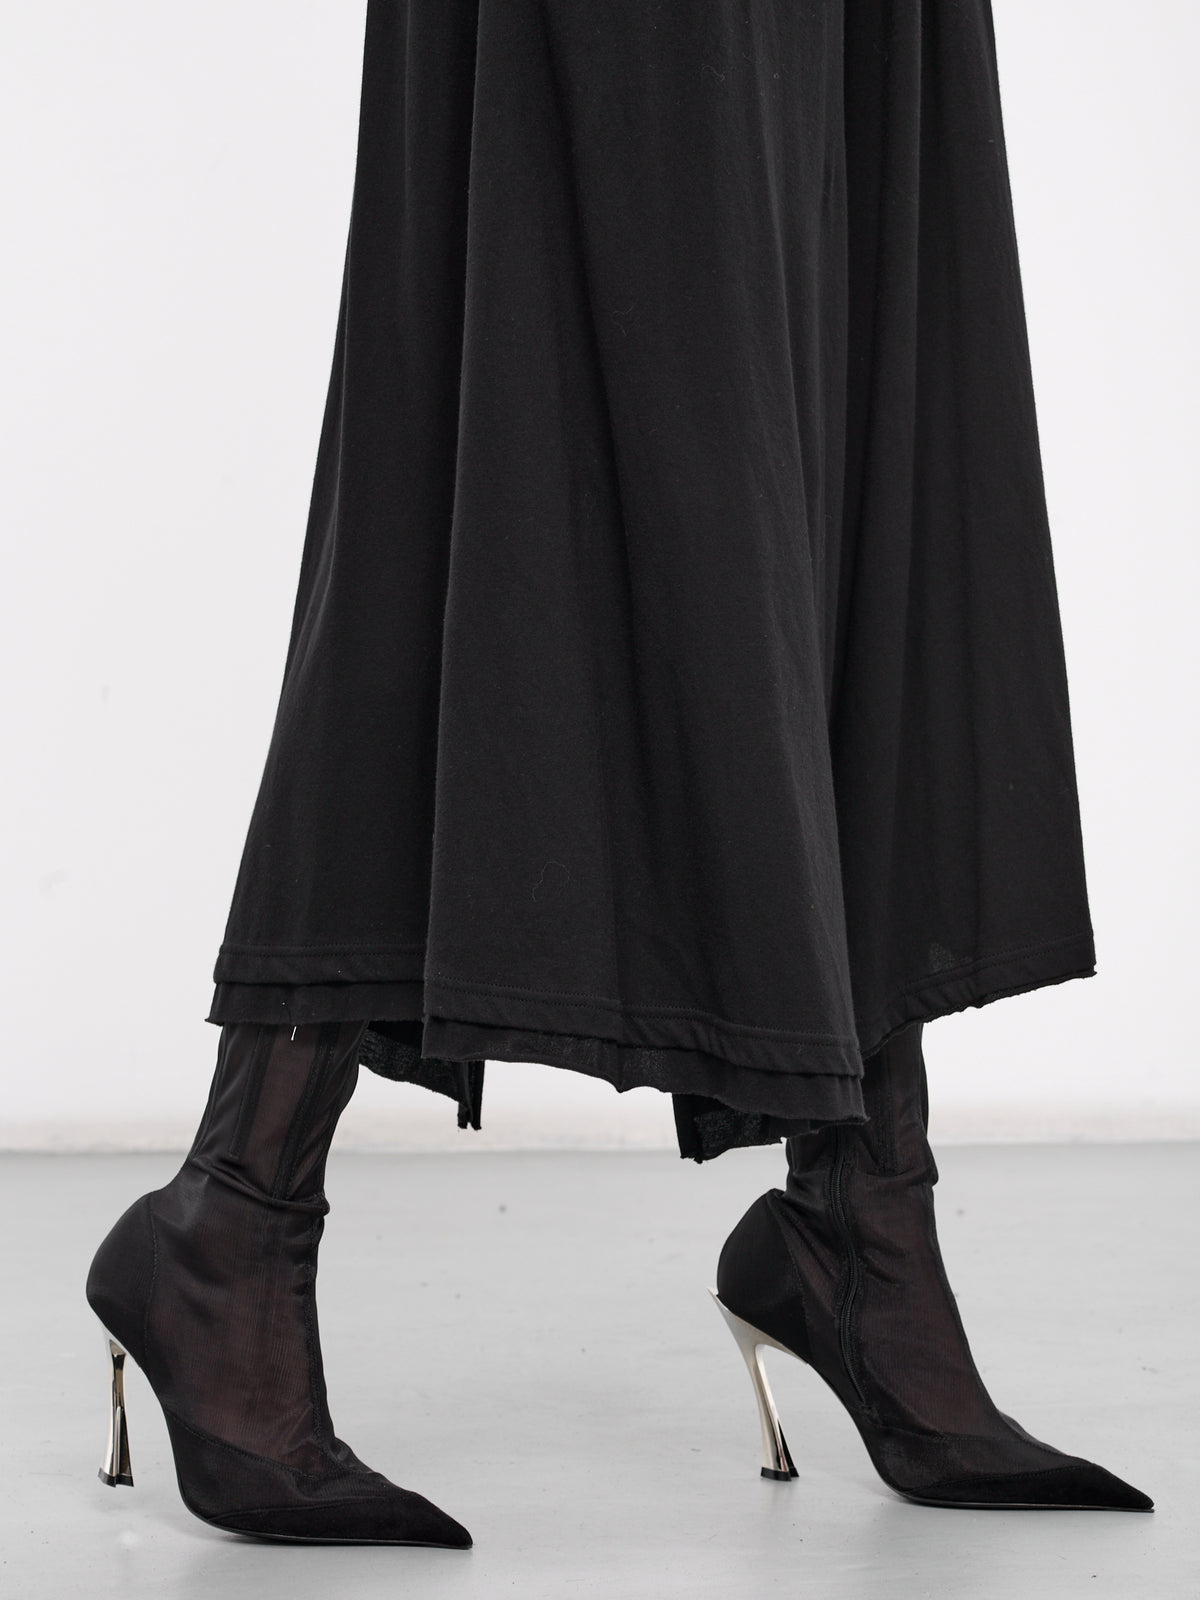 Jersey Gathered Skirt (FS-P62-004-BLACK)